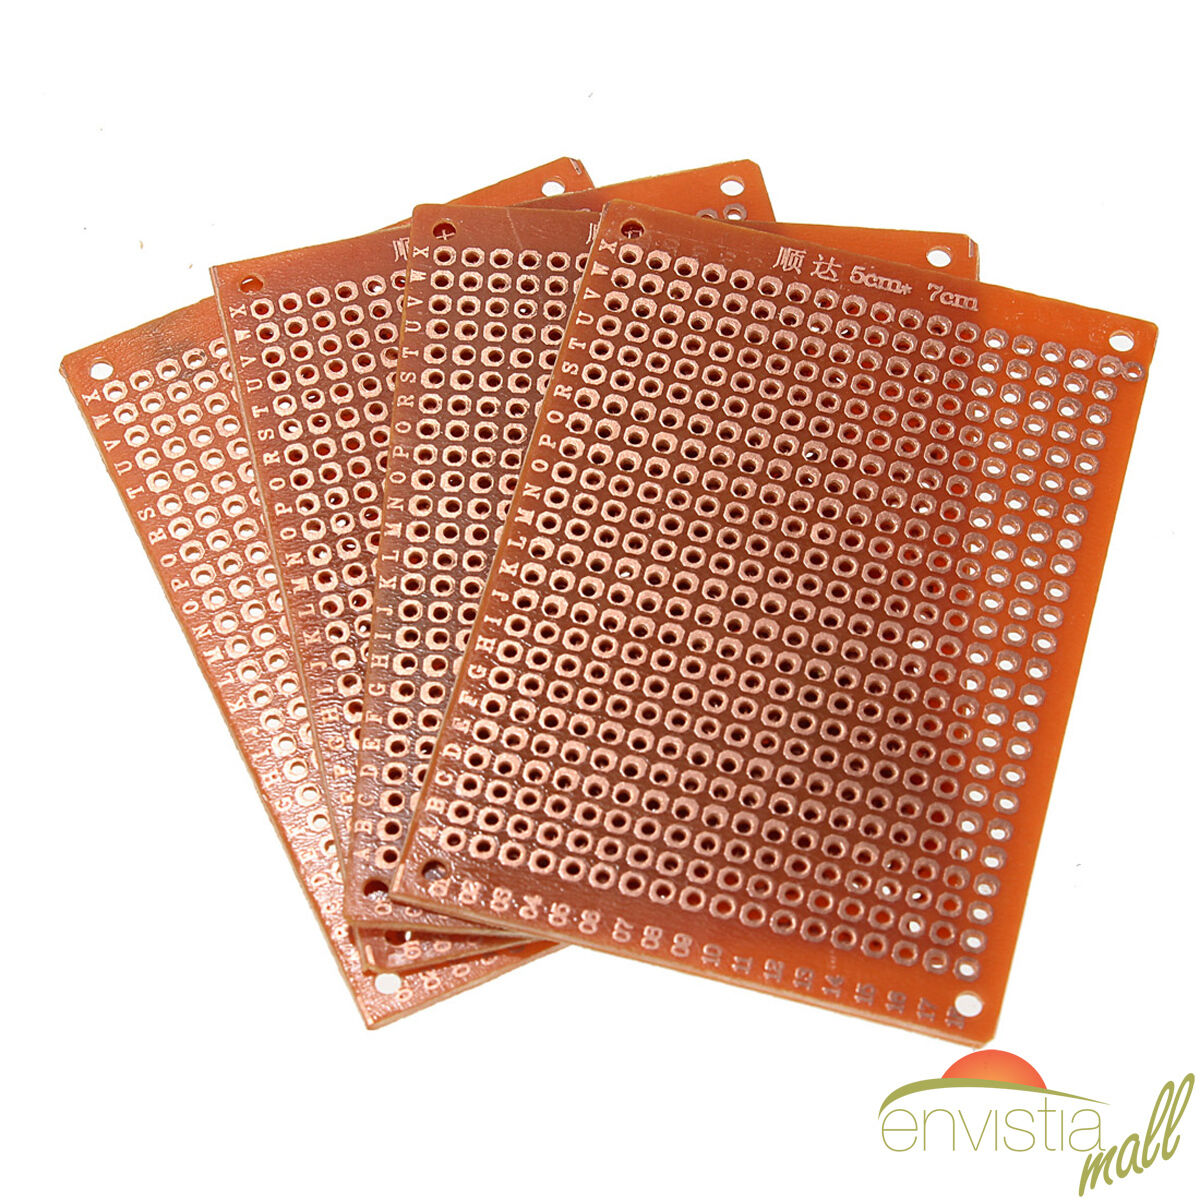 10 Pcs 5x7cm (2x3in) PCB Prototyping Perf Boards Breadboards Circuit Boards Envistia 5 * 7 CM Prototype PCB 10pcs - фотография #4